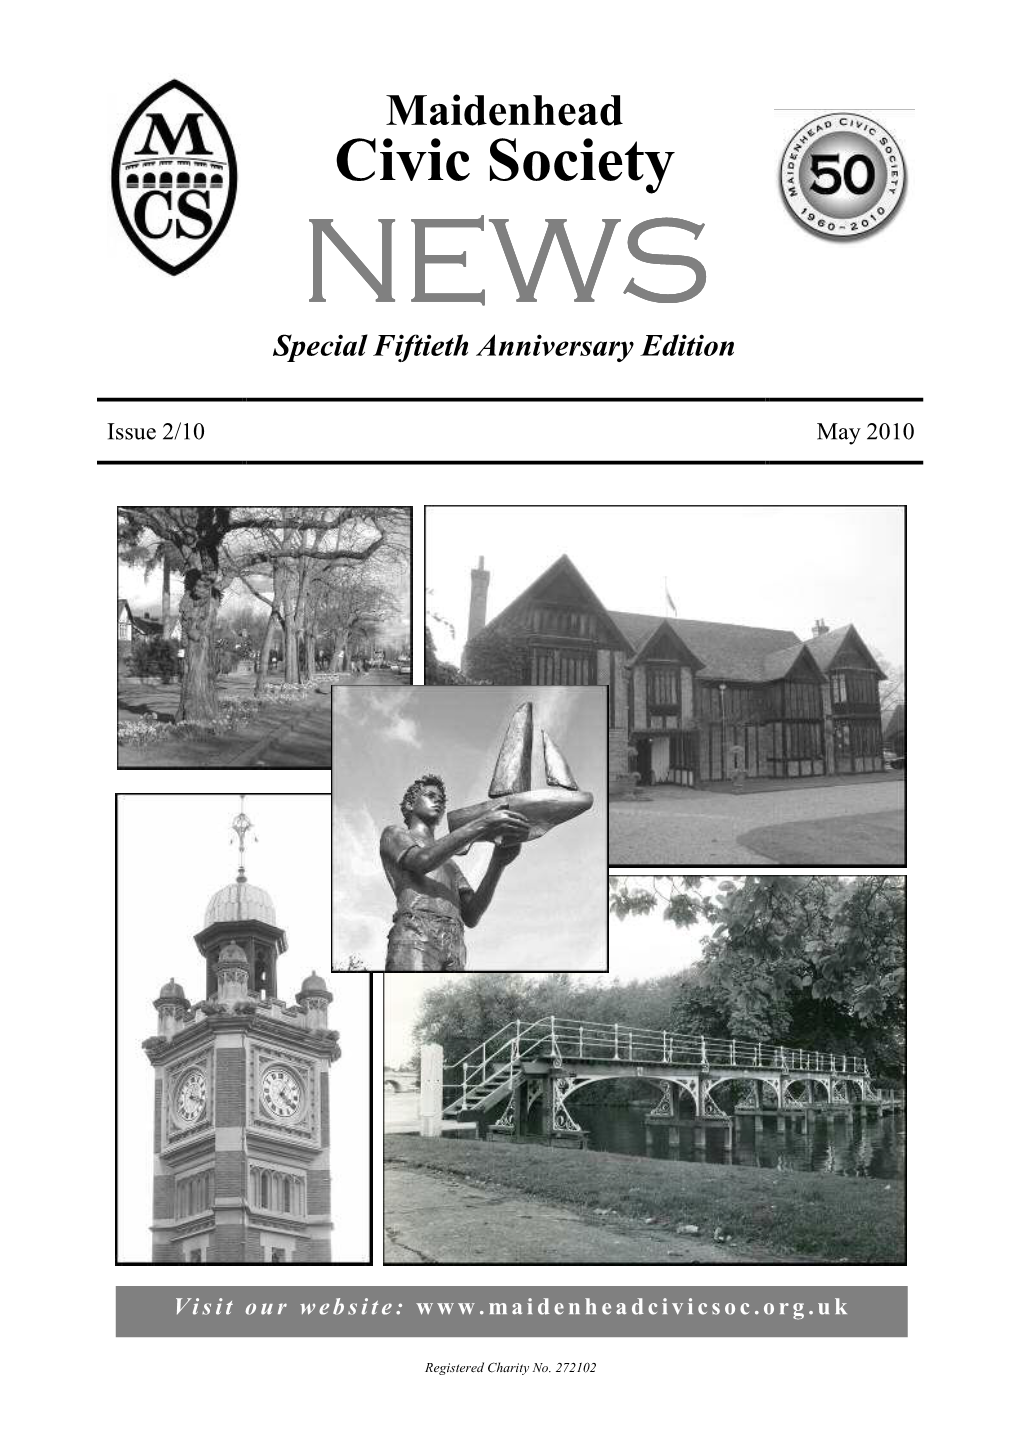 Maidenhead Civic Society NEWSNEWS Special Fiftieth Anniversary Edition